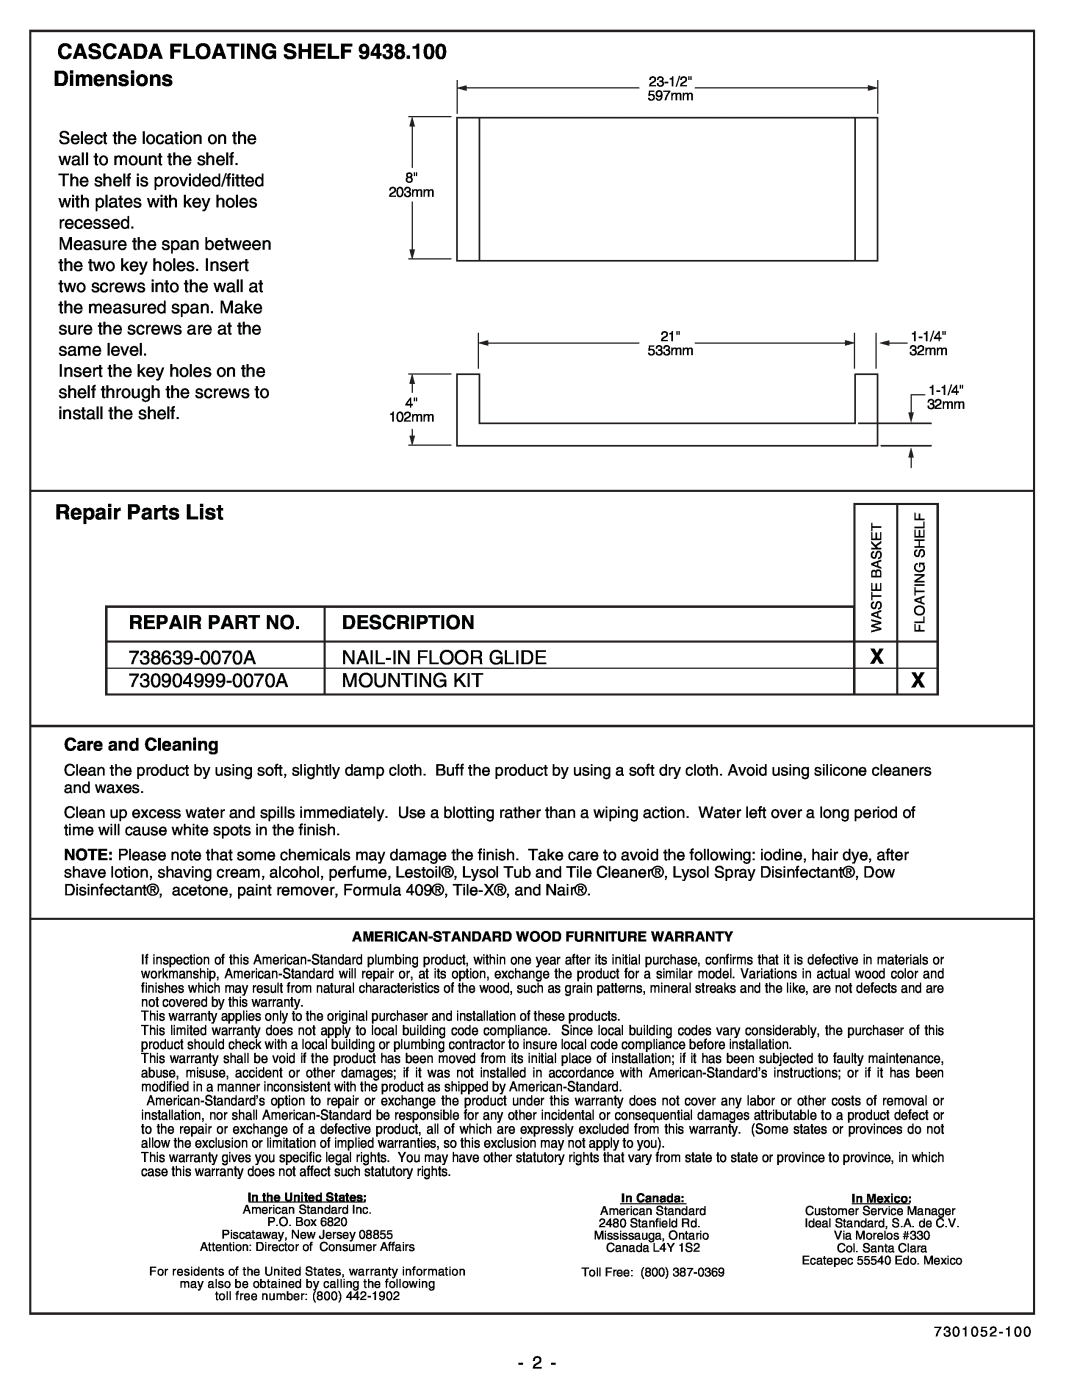 American Standard 9438.100 CASCADA FLOATING SHELF Dimensions, Repair Parts List, Repair Part No, Description, 738639-0070A 